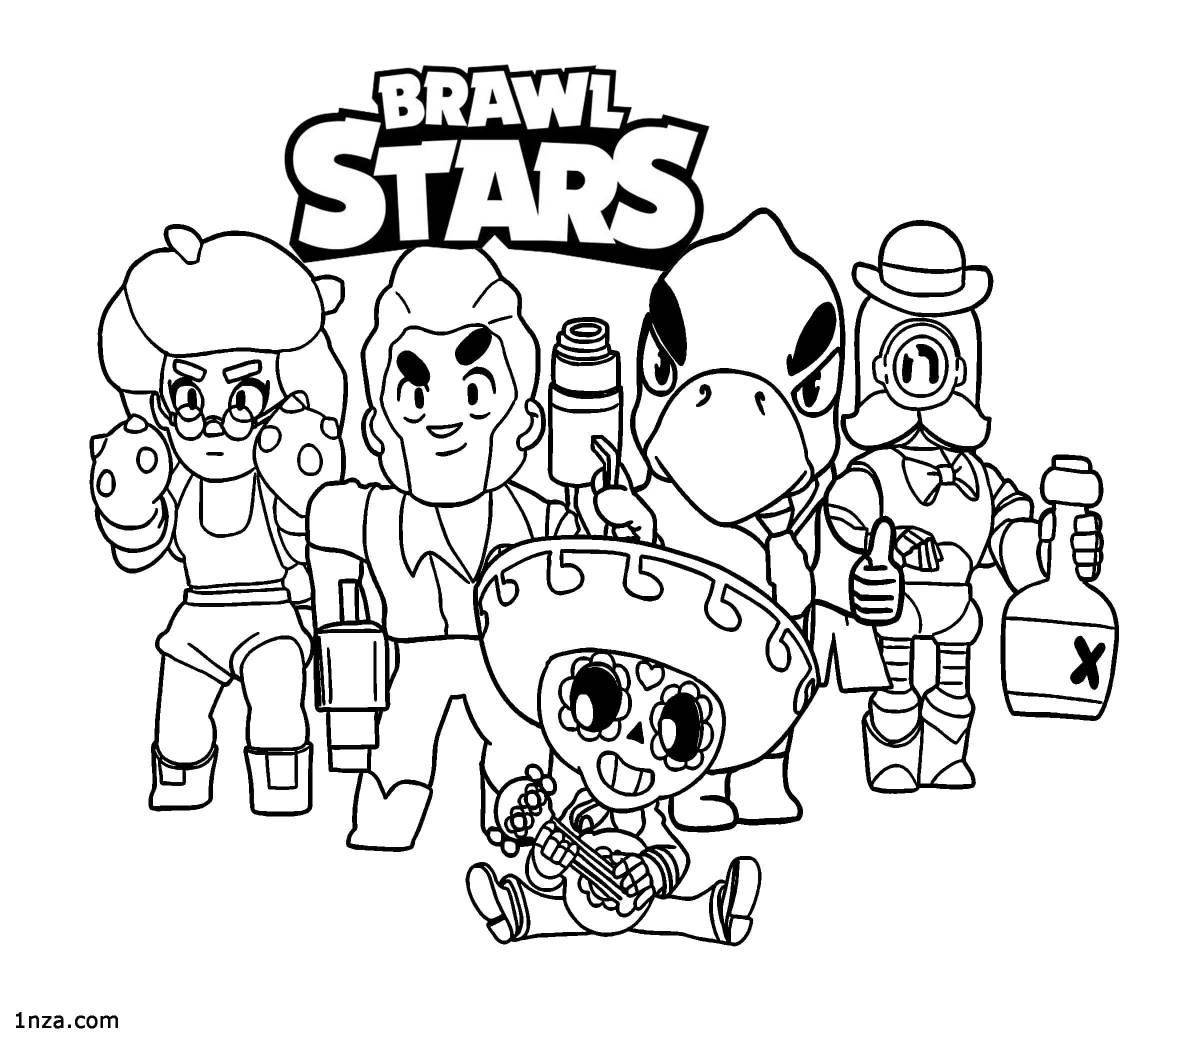 Bravo stars penny elegant coloring book